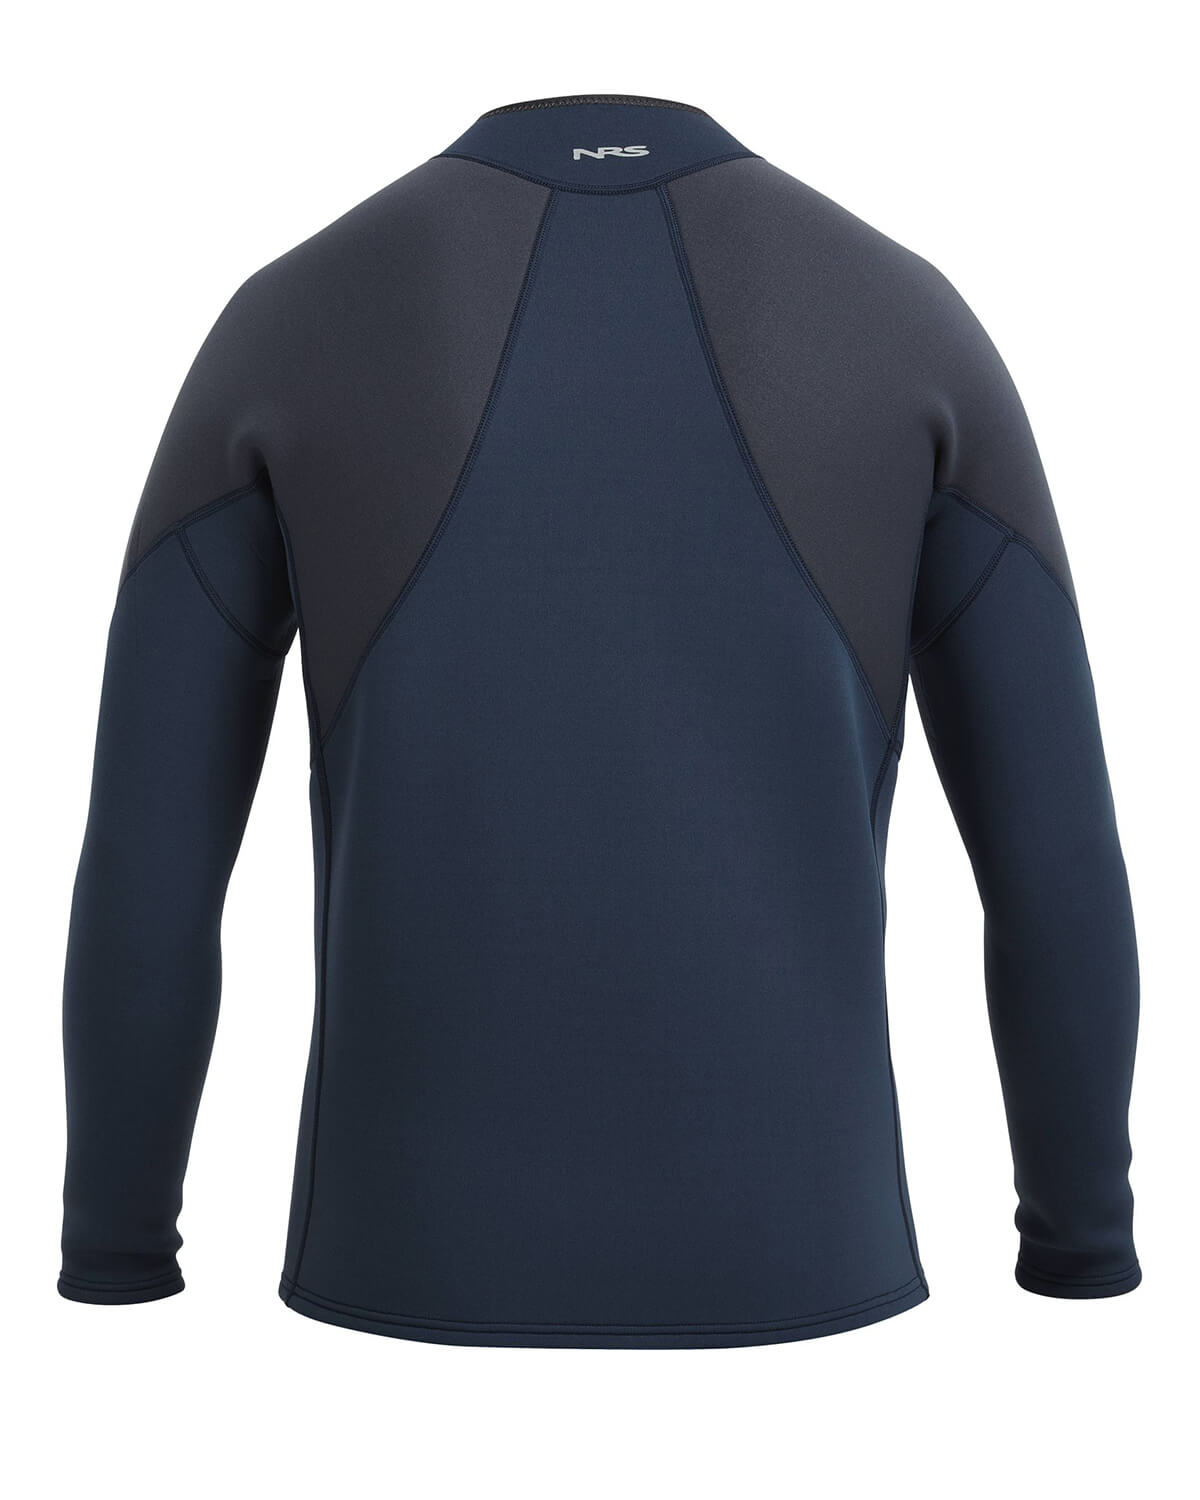 0.5mm Men's NRS HydroSkin L/S Shirt | Wetsuit Wearhouse